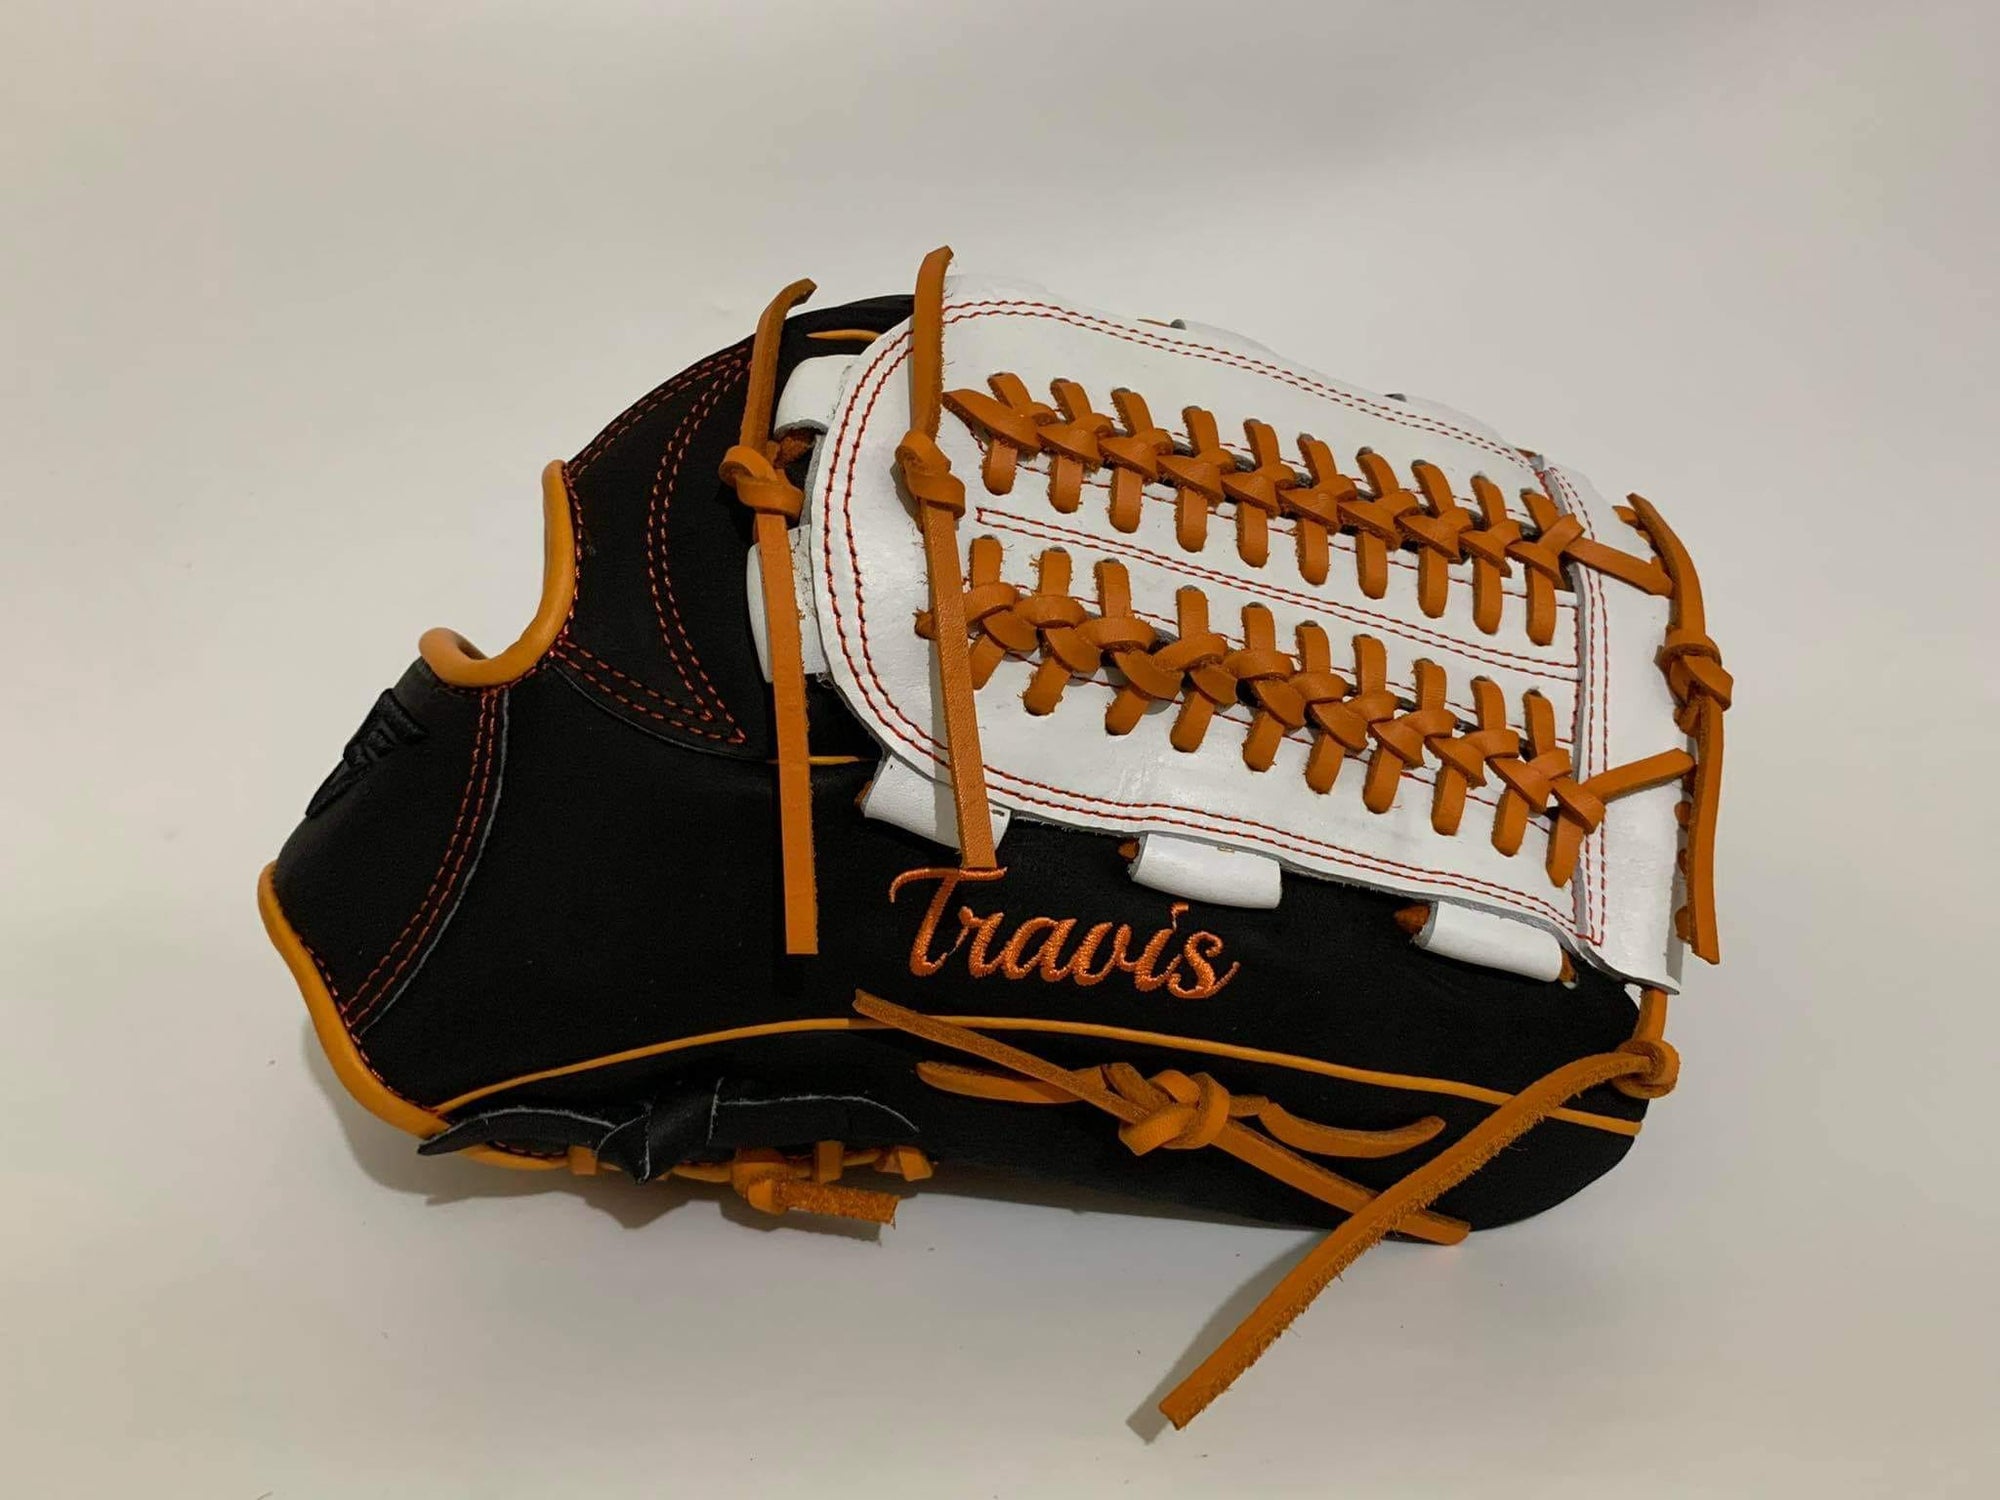 Custom Baseball Gloves: What To Look For